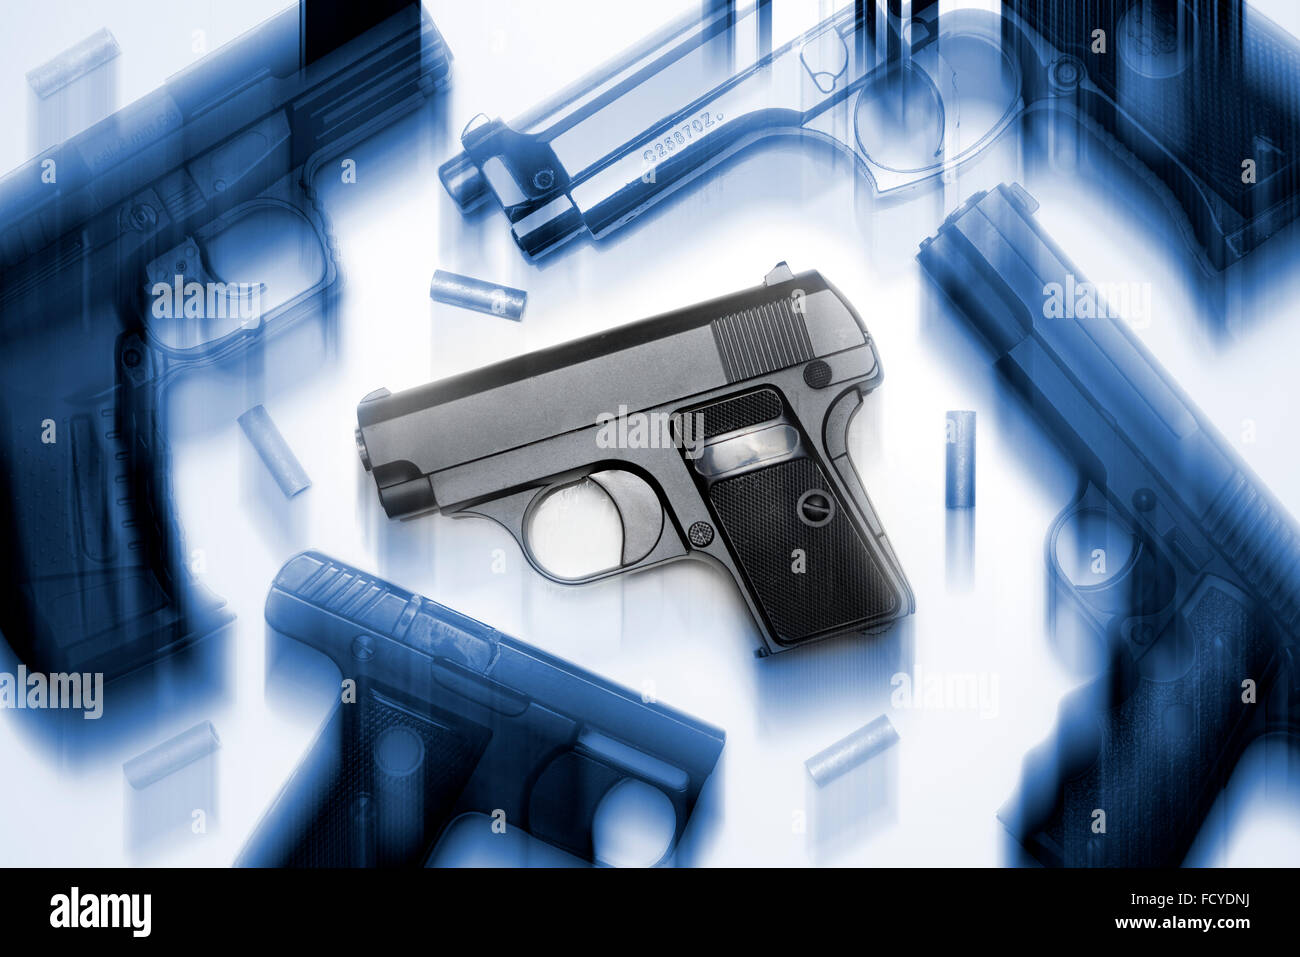 Blank guns and gas pistols Stock Photo - Alamy